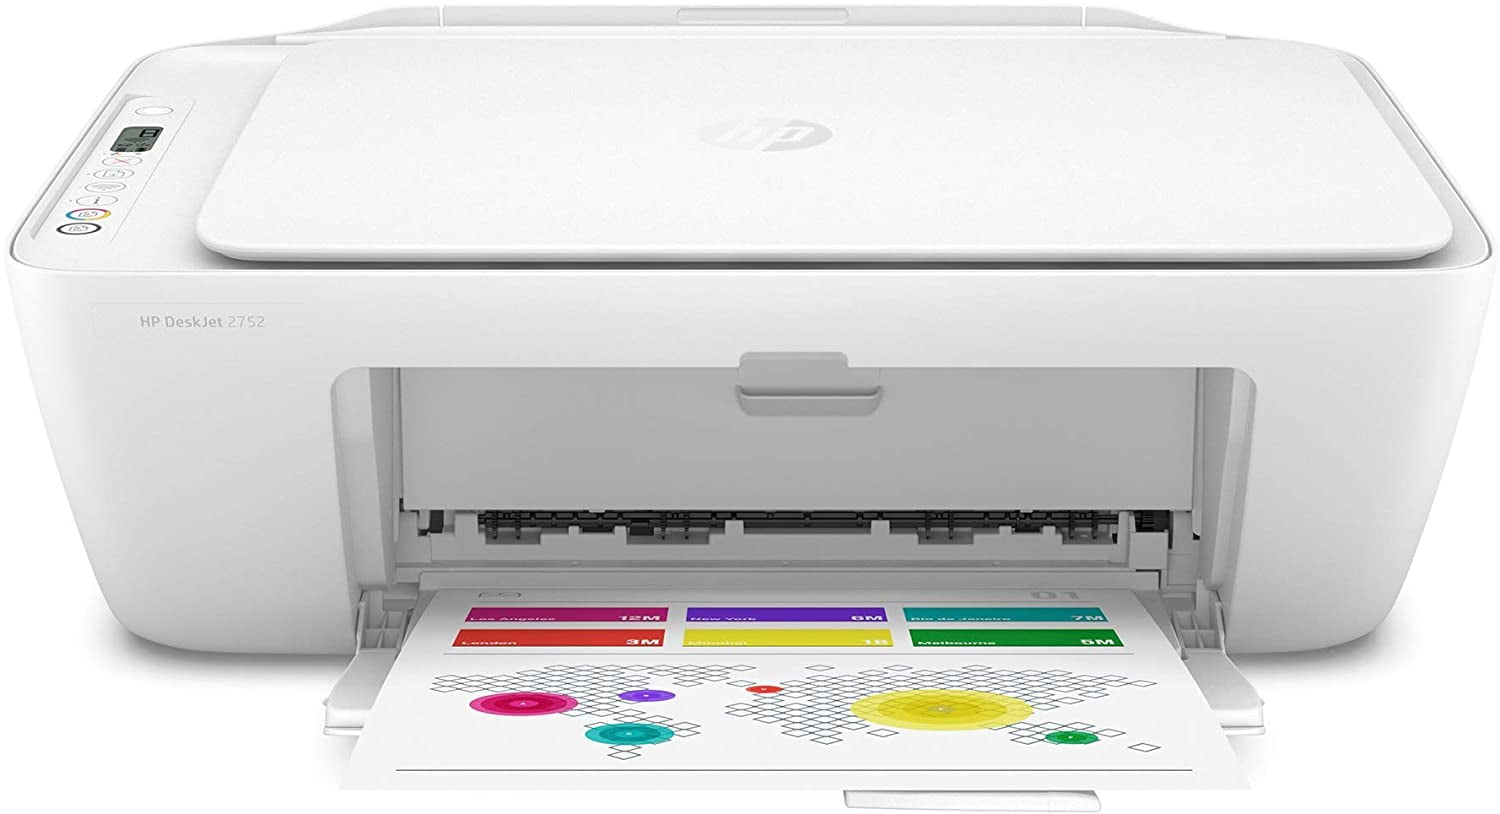 HP DeskJet 2700 All-in-One Printer series for Sale in Gulshan